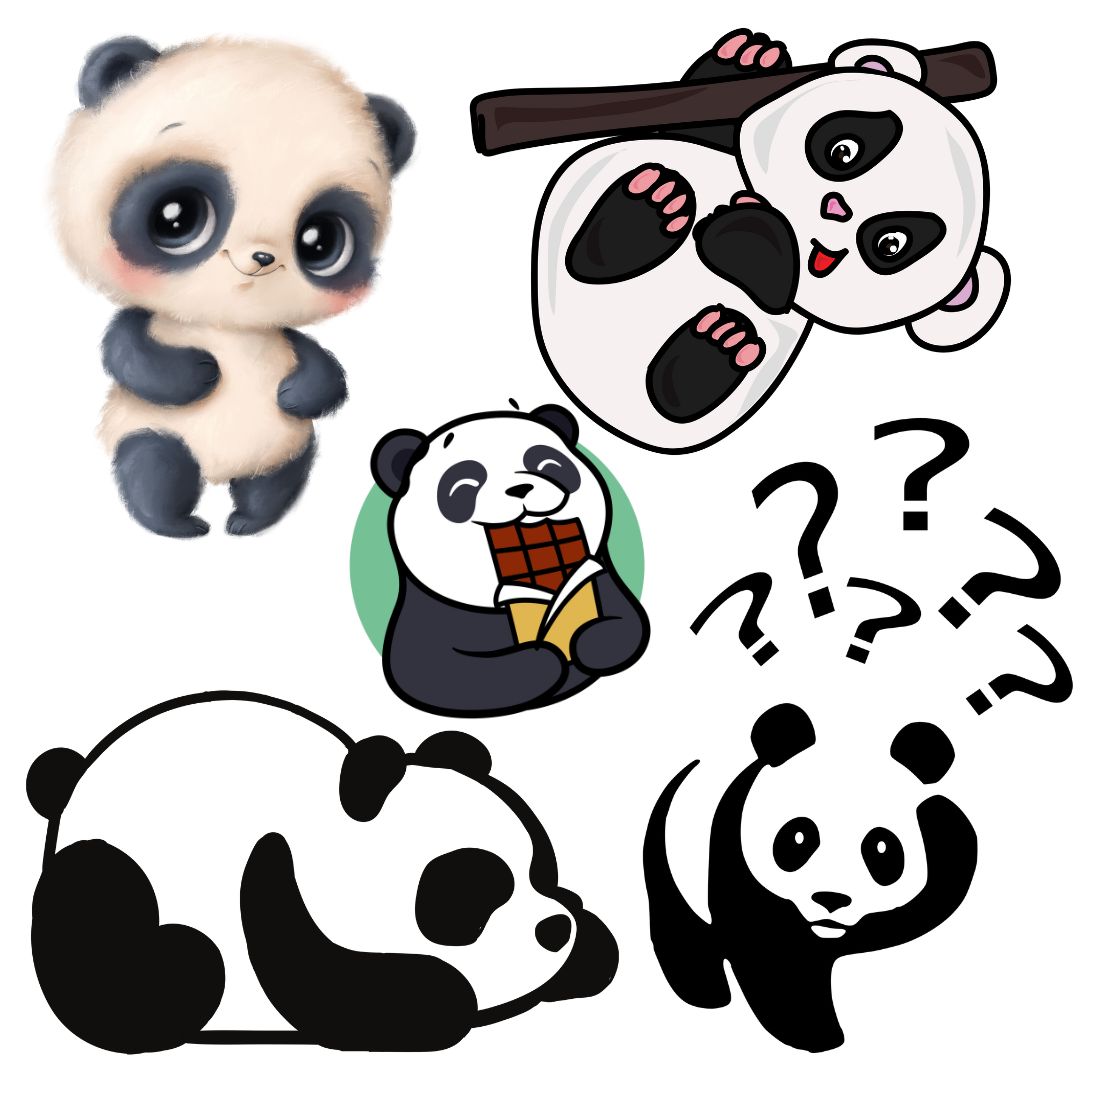 Diverse of panda cnditions.